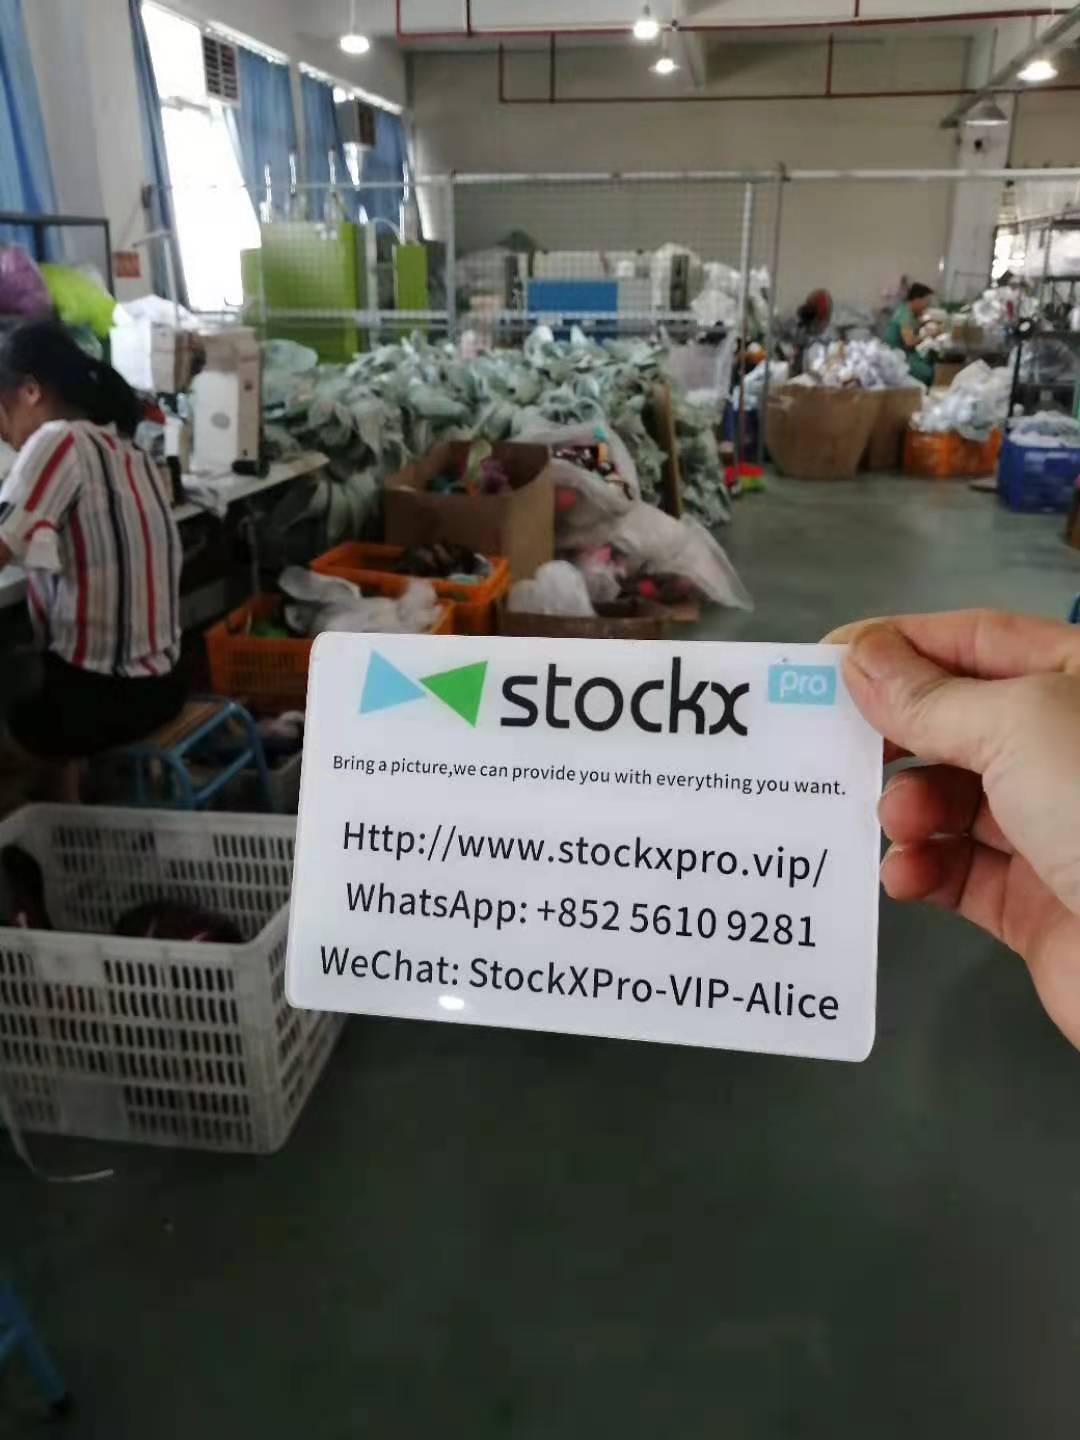 StockxPro